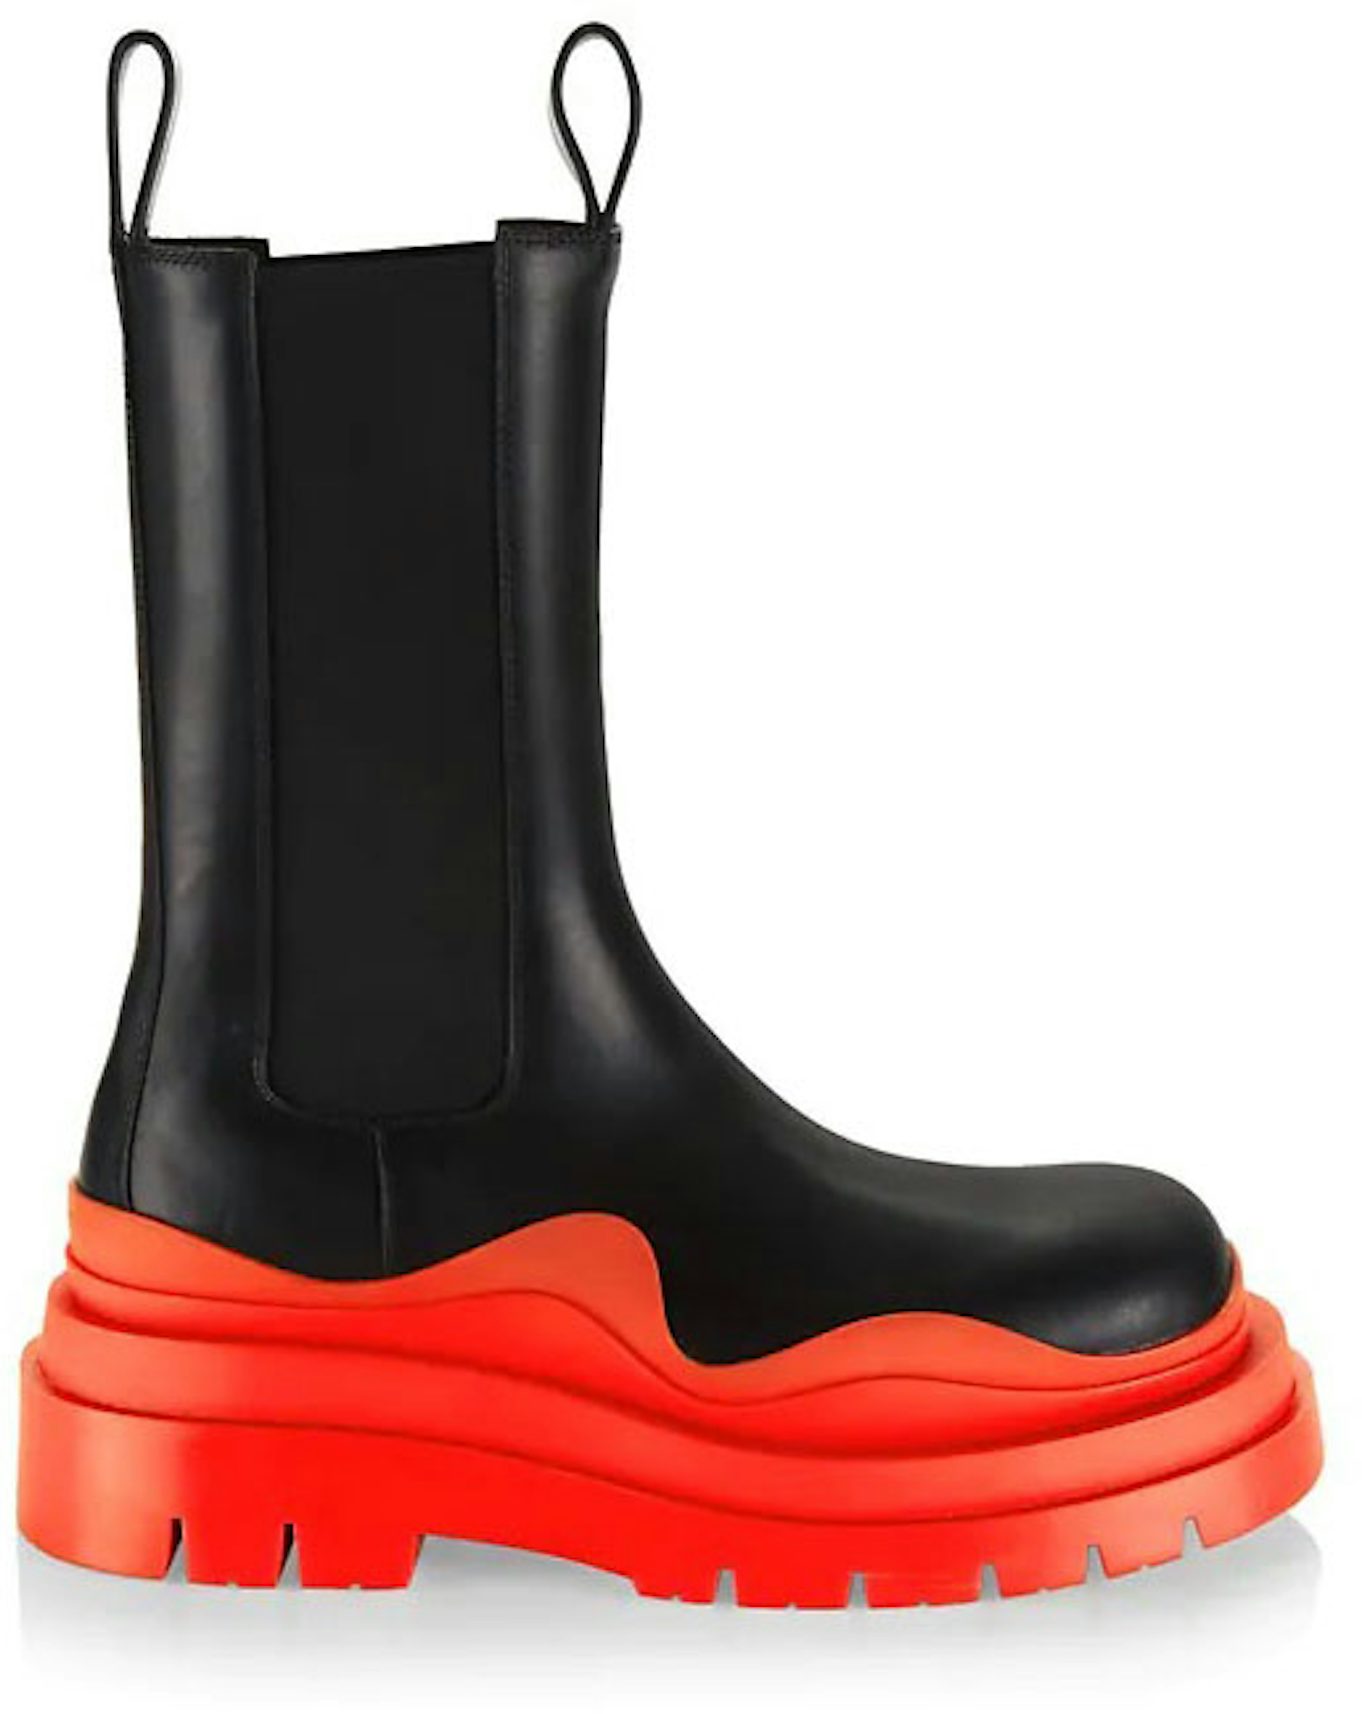 Bottega Veneta Flash Boots Black Tangerine (Women's